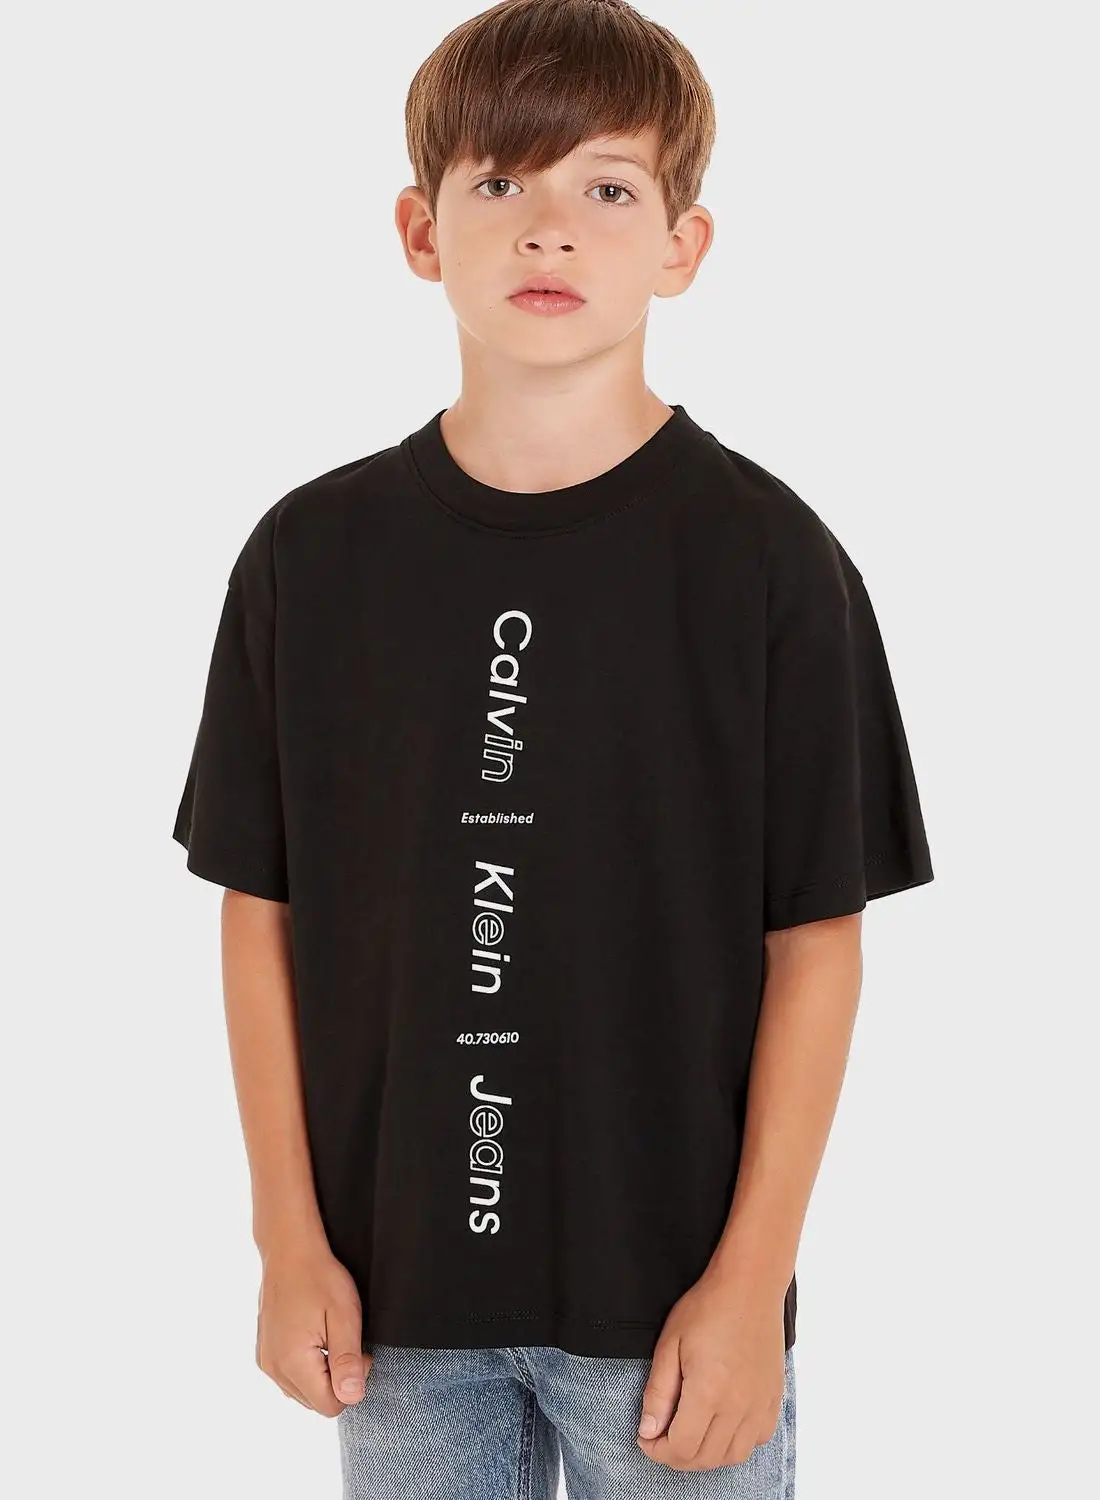 Calvin Klein Jeans Youth Logo T-Shirt